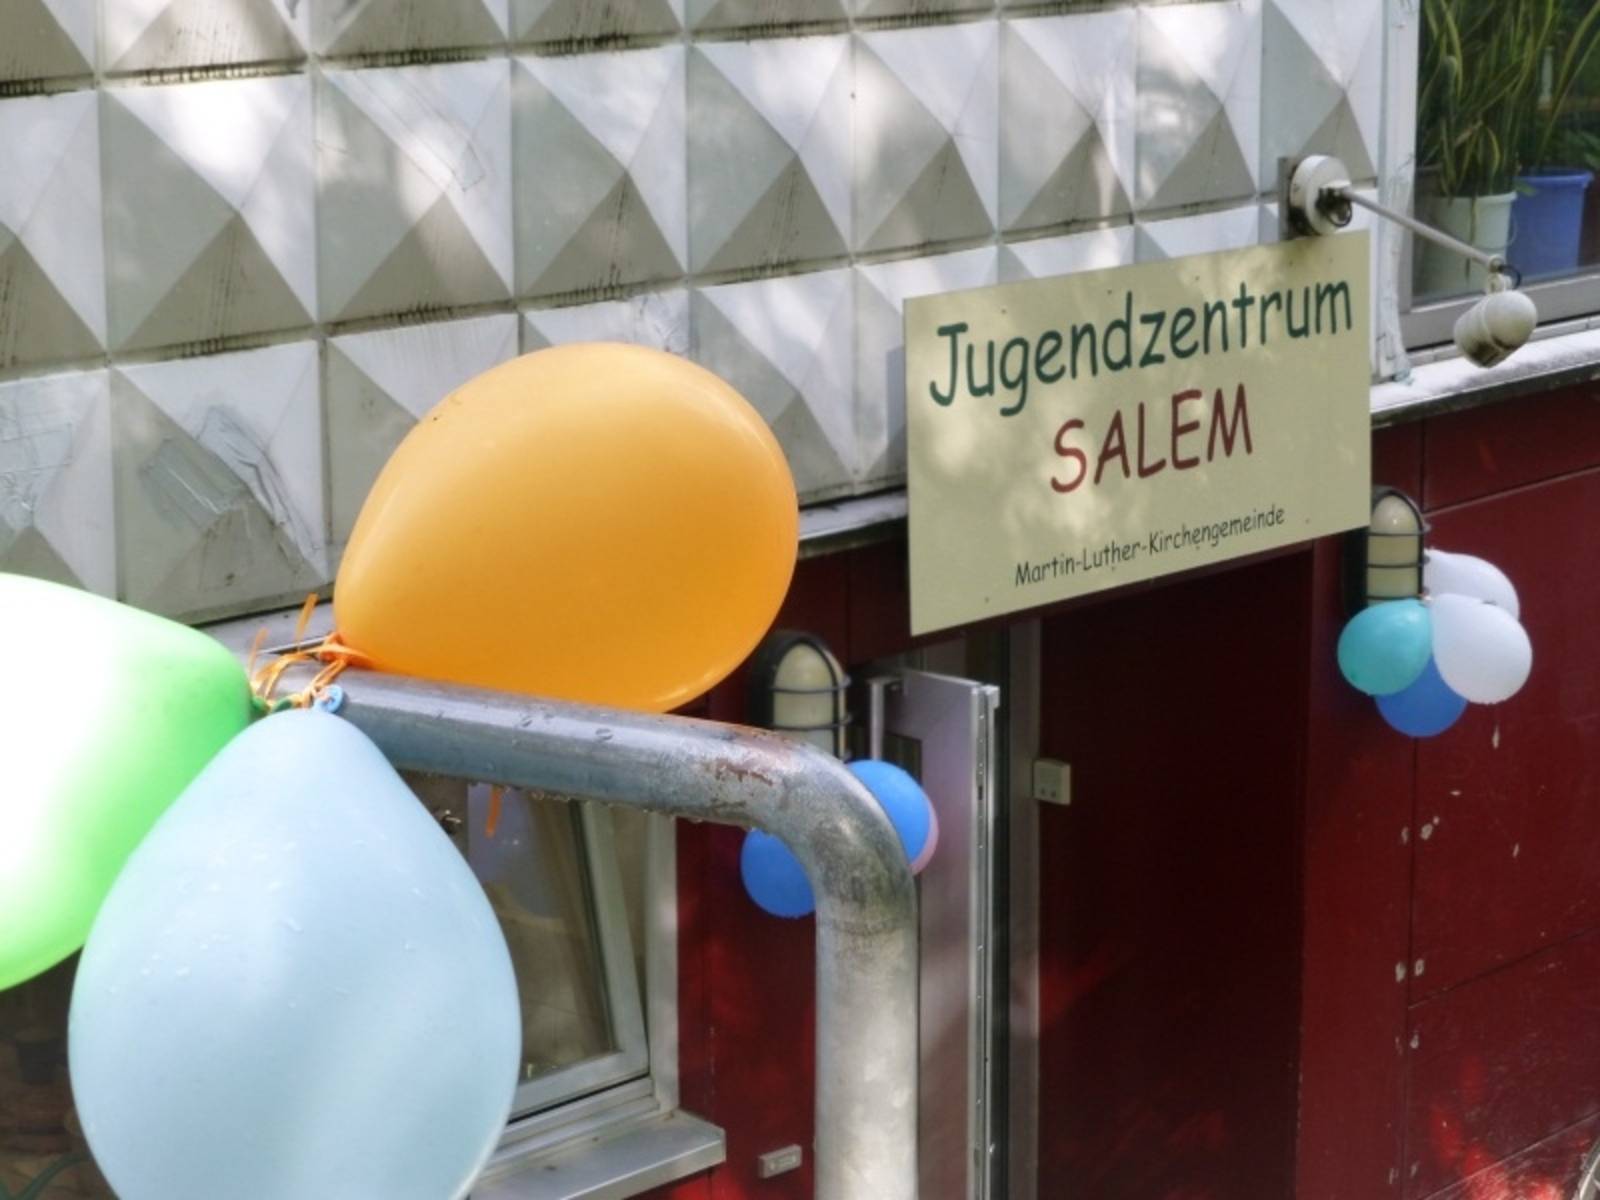 Der Eingang des Jugendzentrums Salem an dem Luftballons aufgehängt wurden.